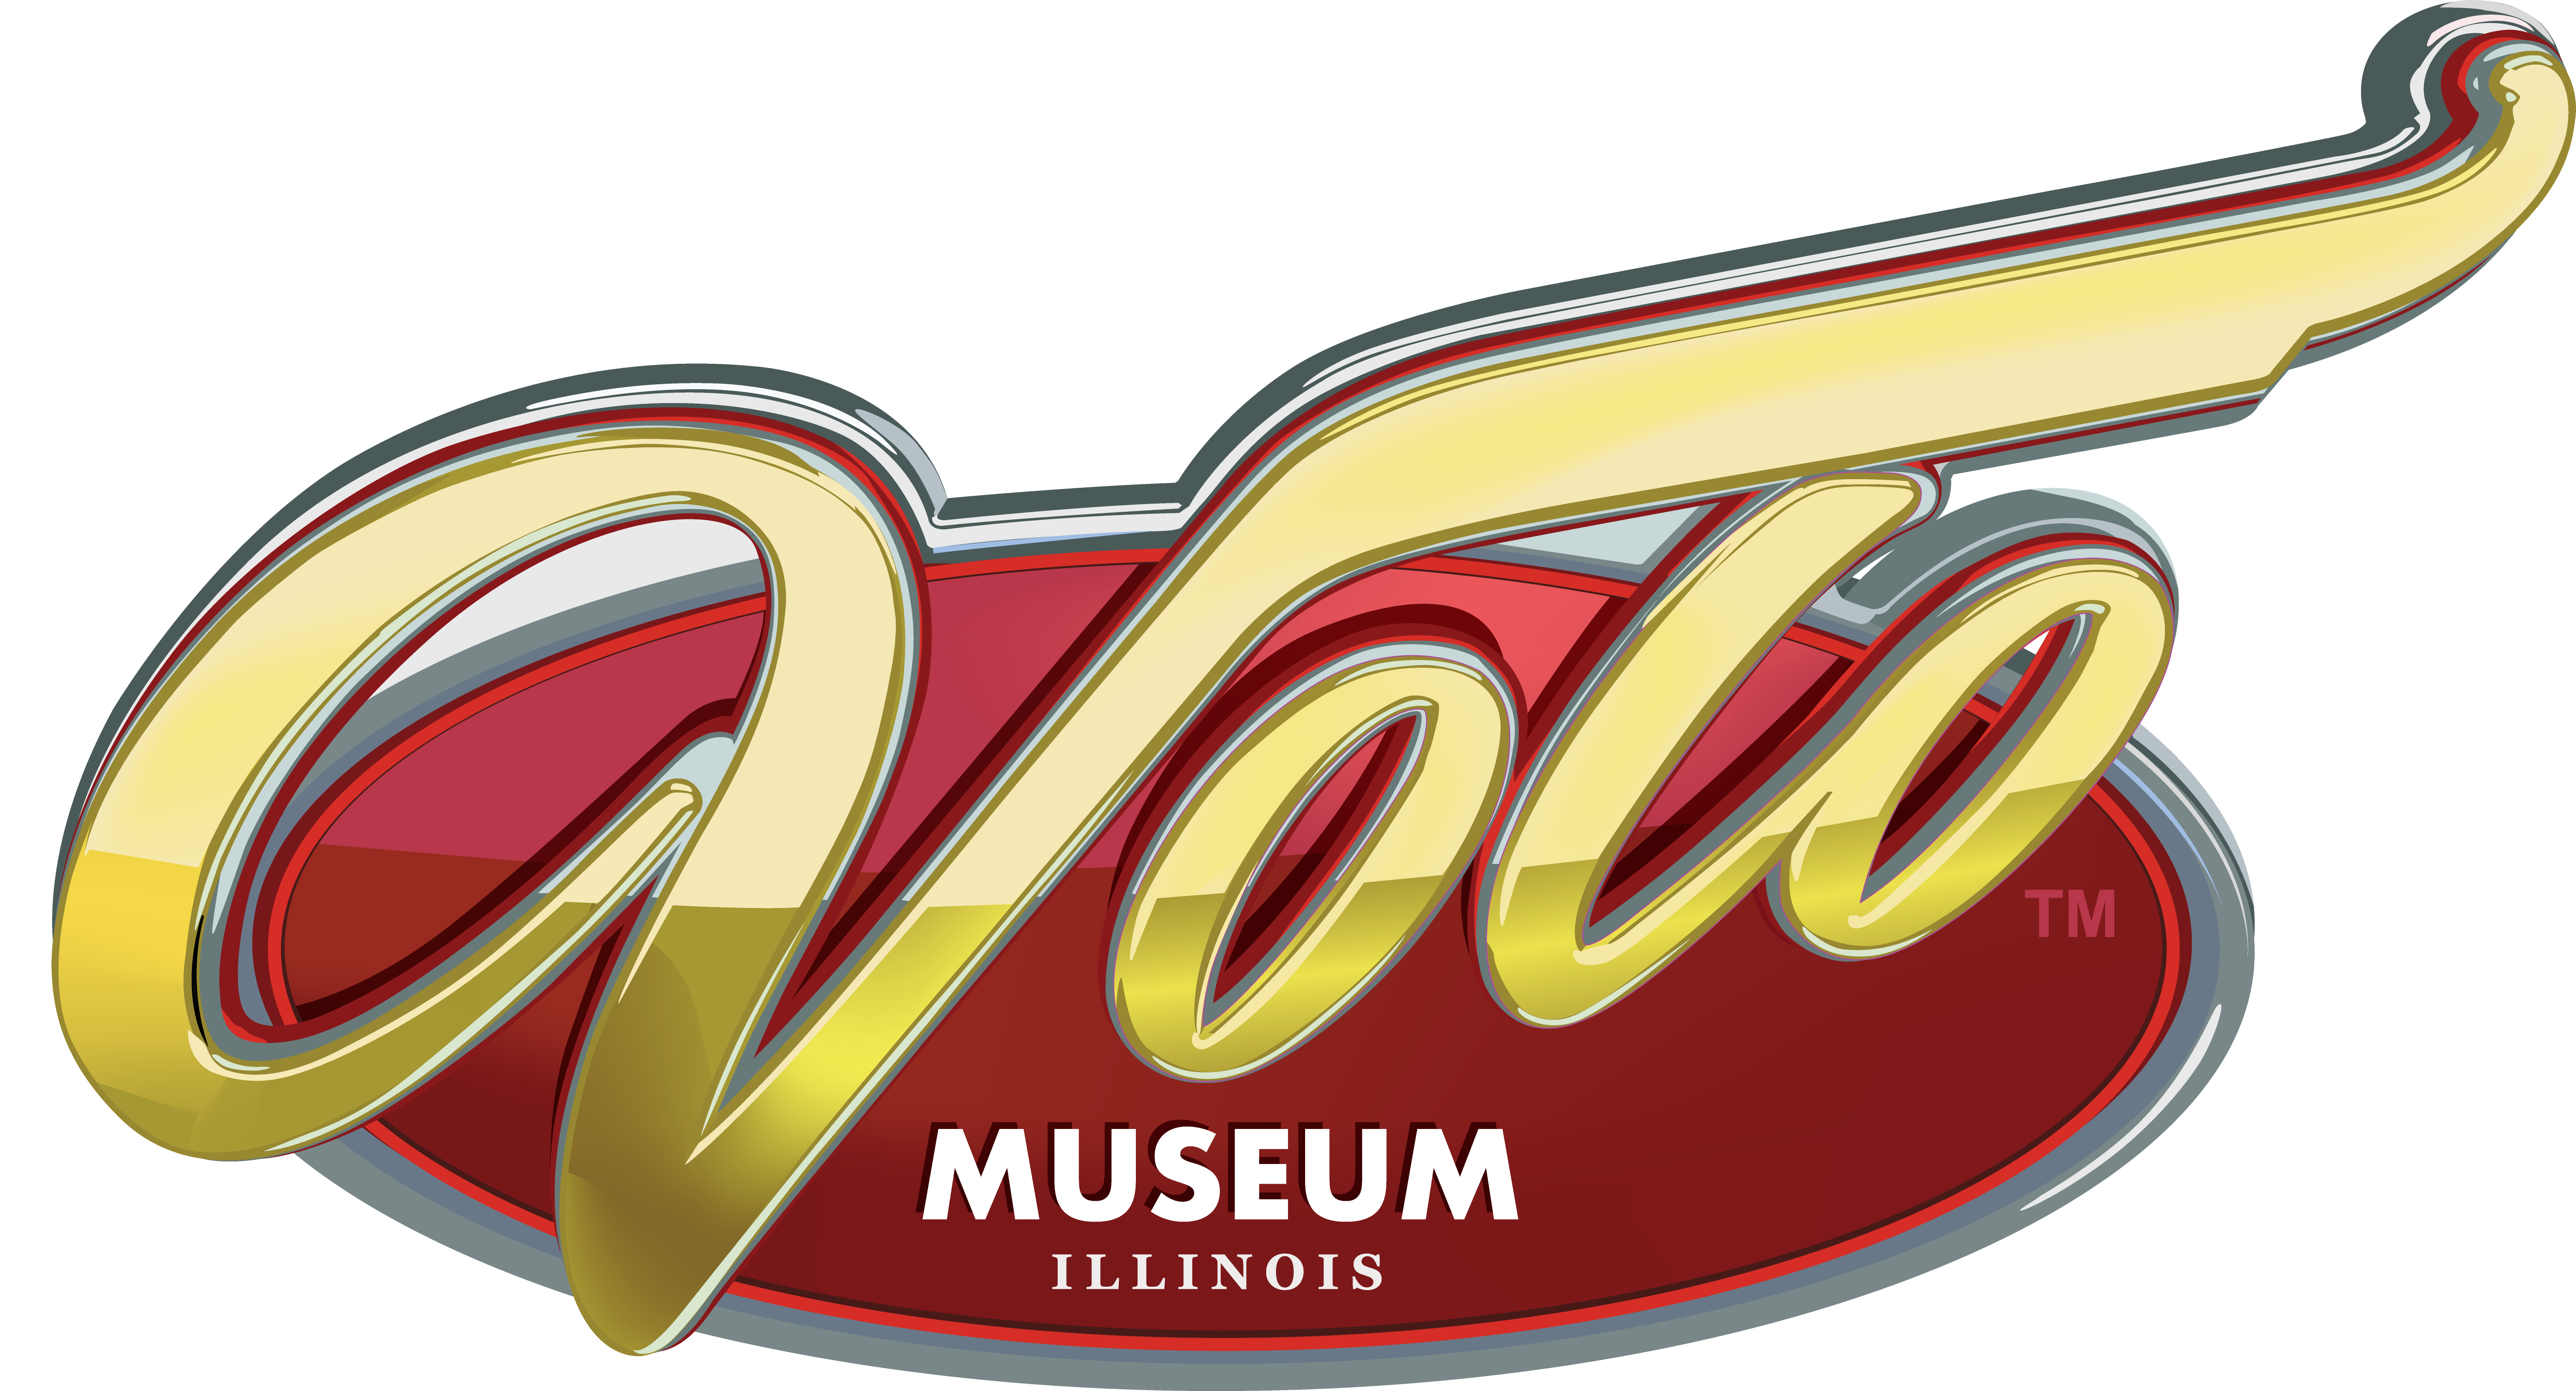 Volo Museum Illinois logo